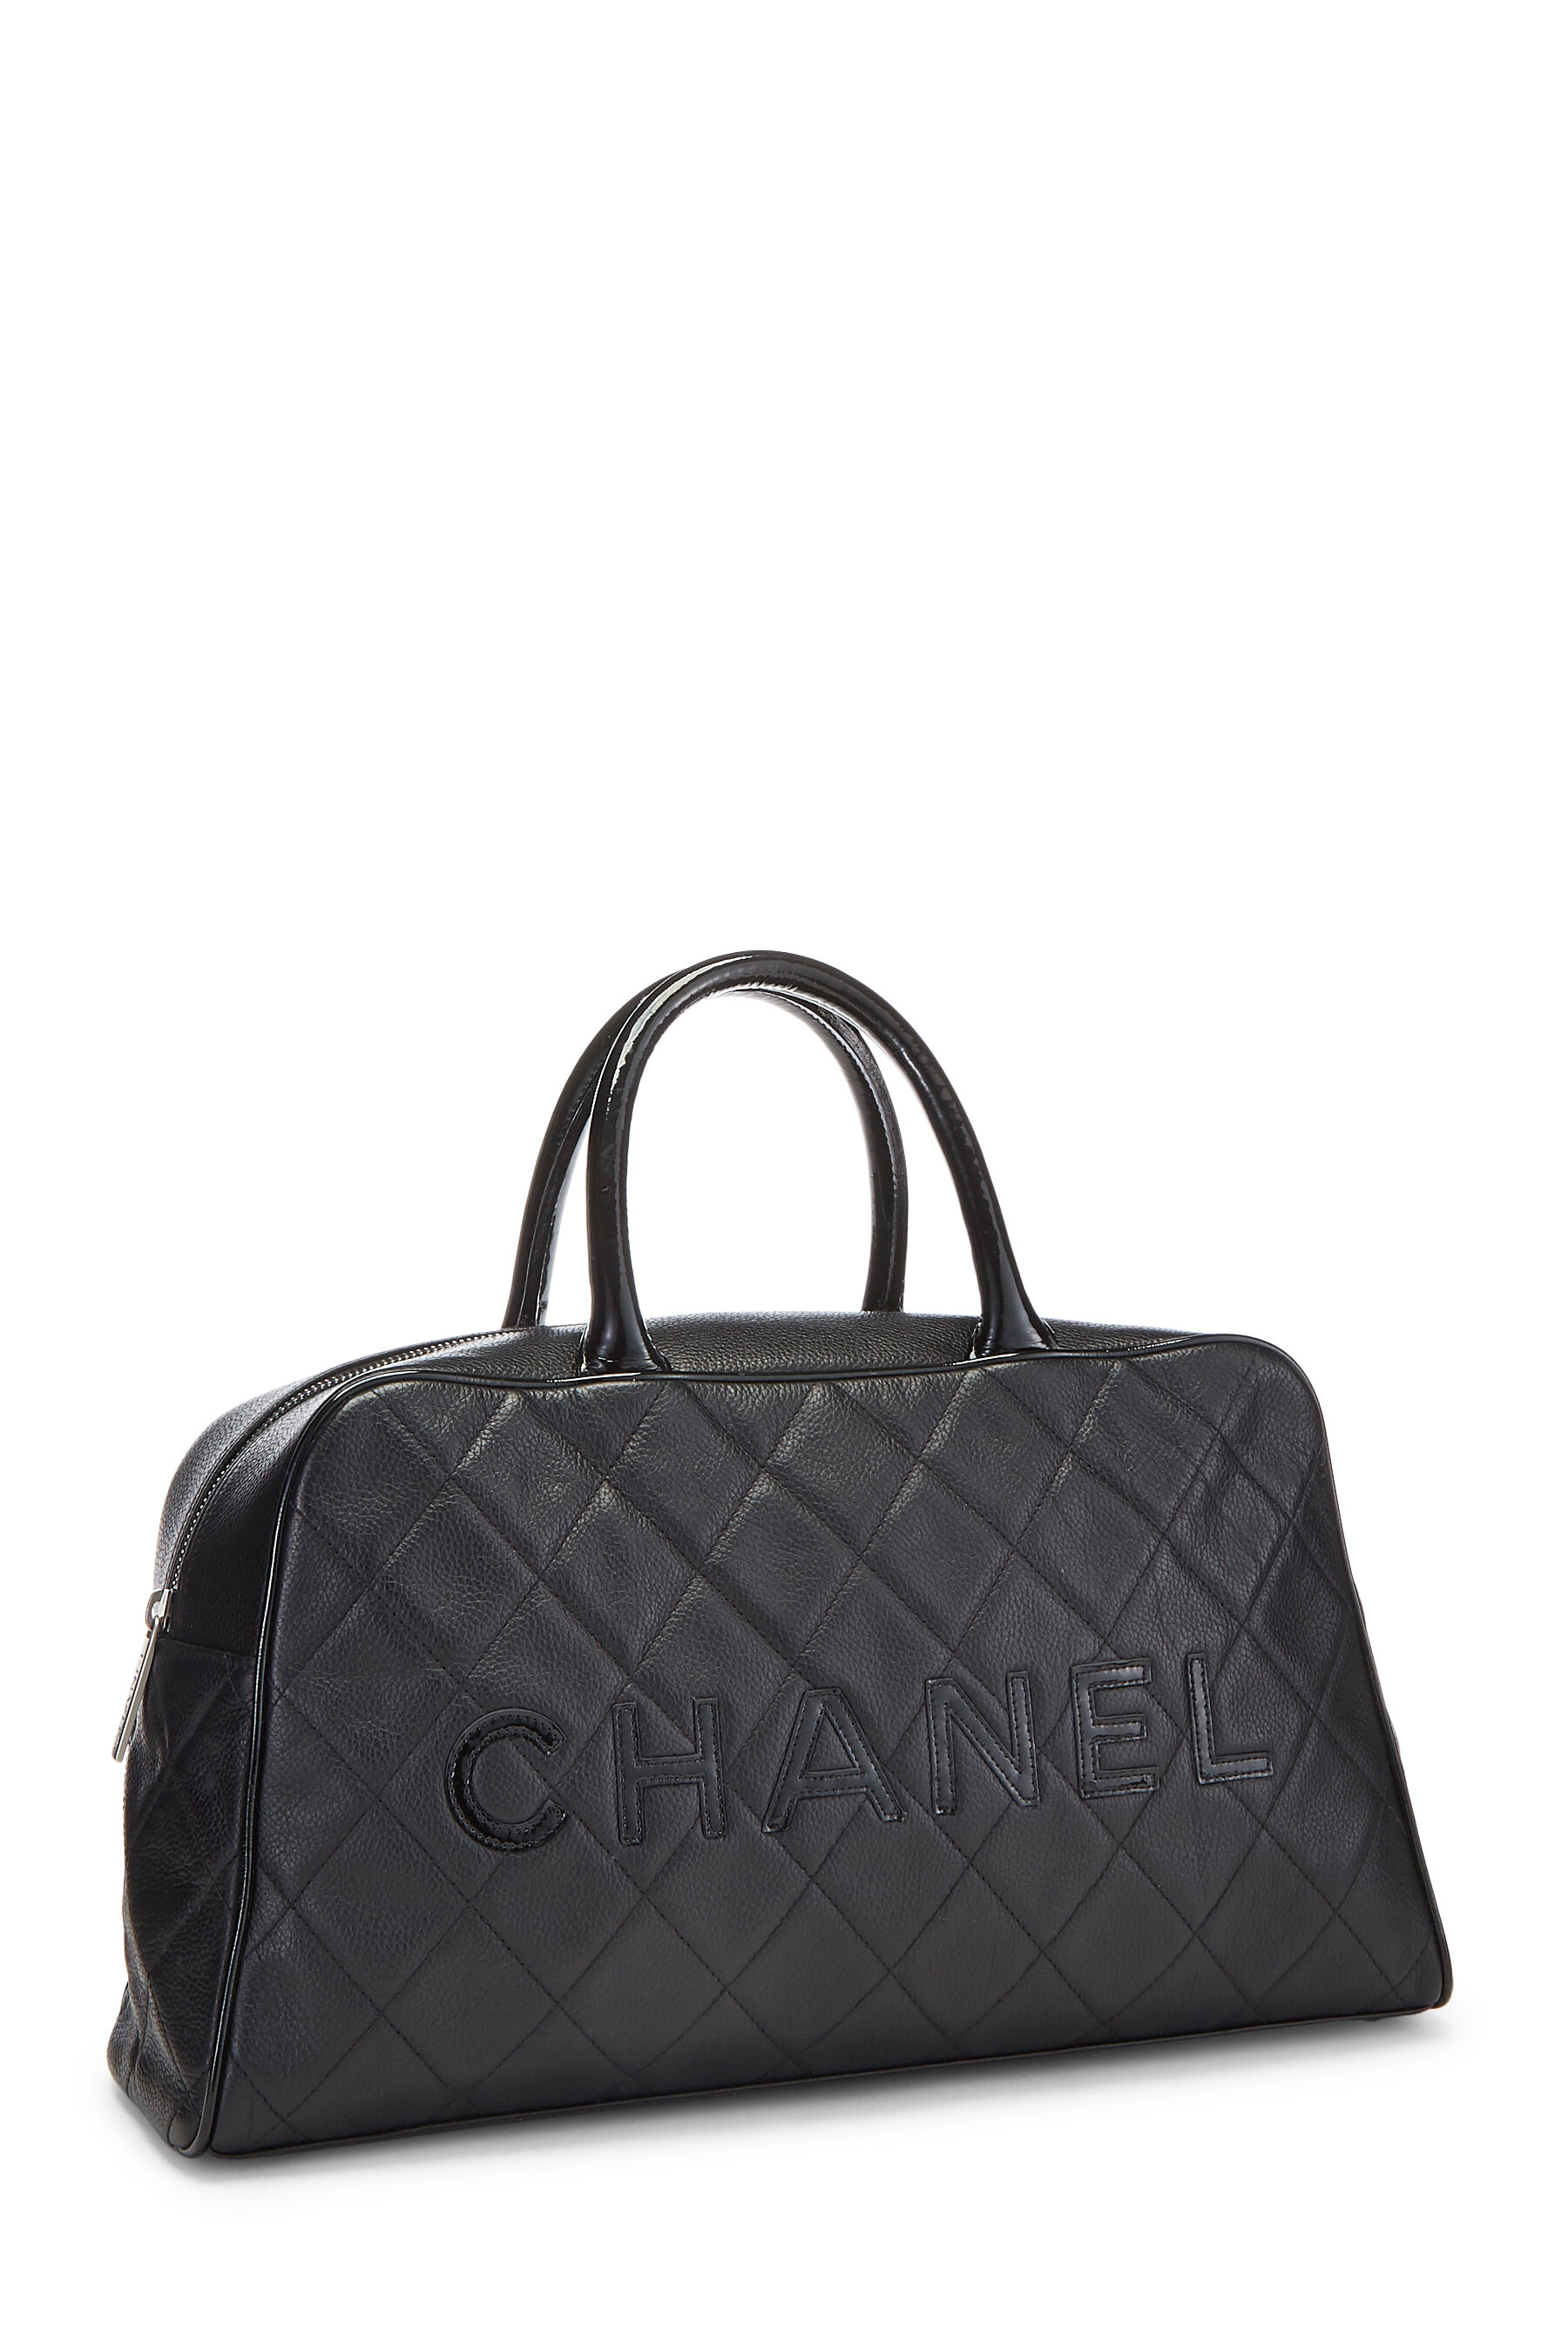 Chanel Black Quilted Caviar Bowler Medium Q6B0190FKB008